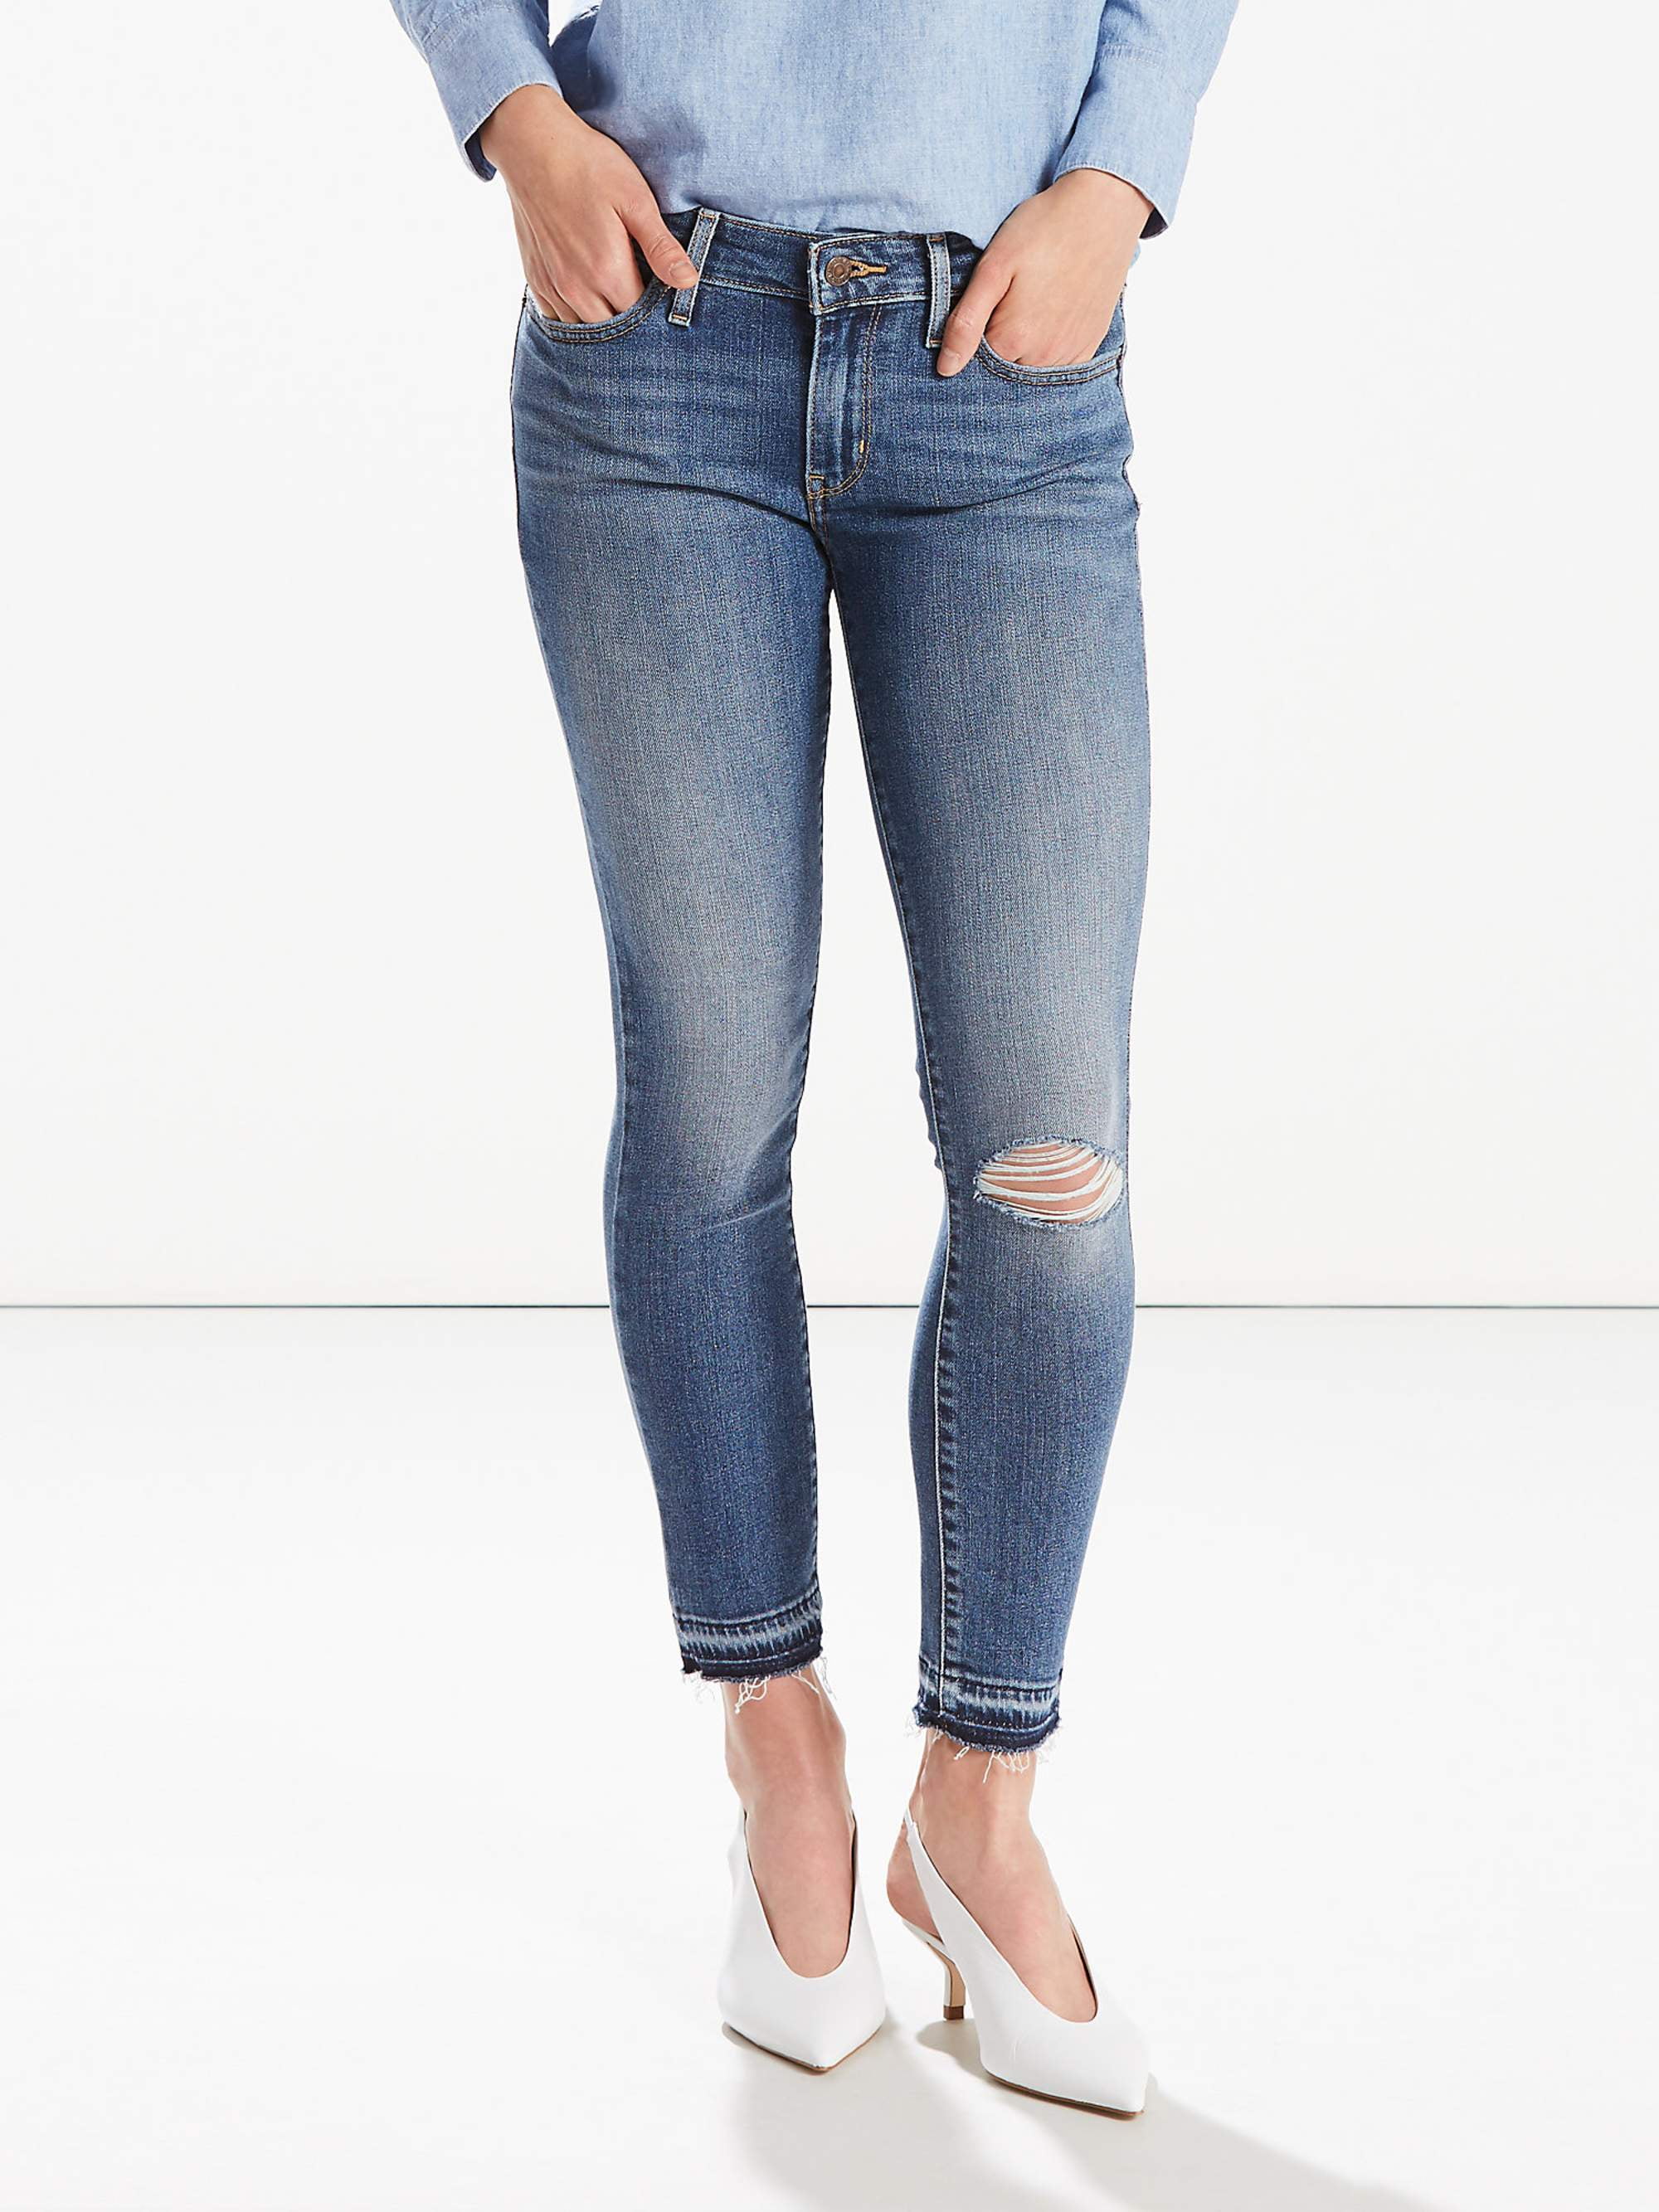 Levi's Women's 711 Skinny Ankle Jeans 